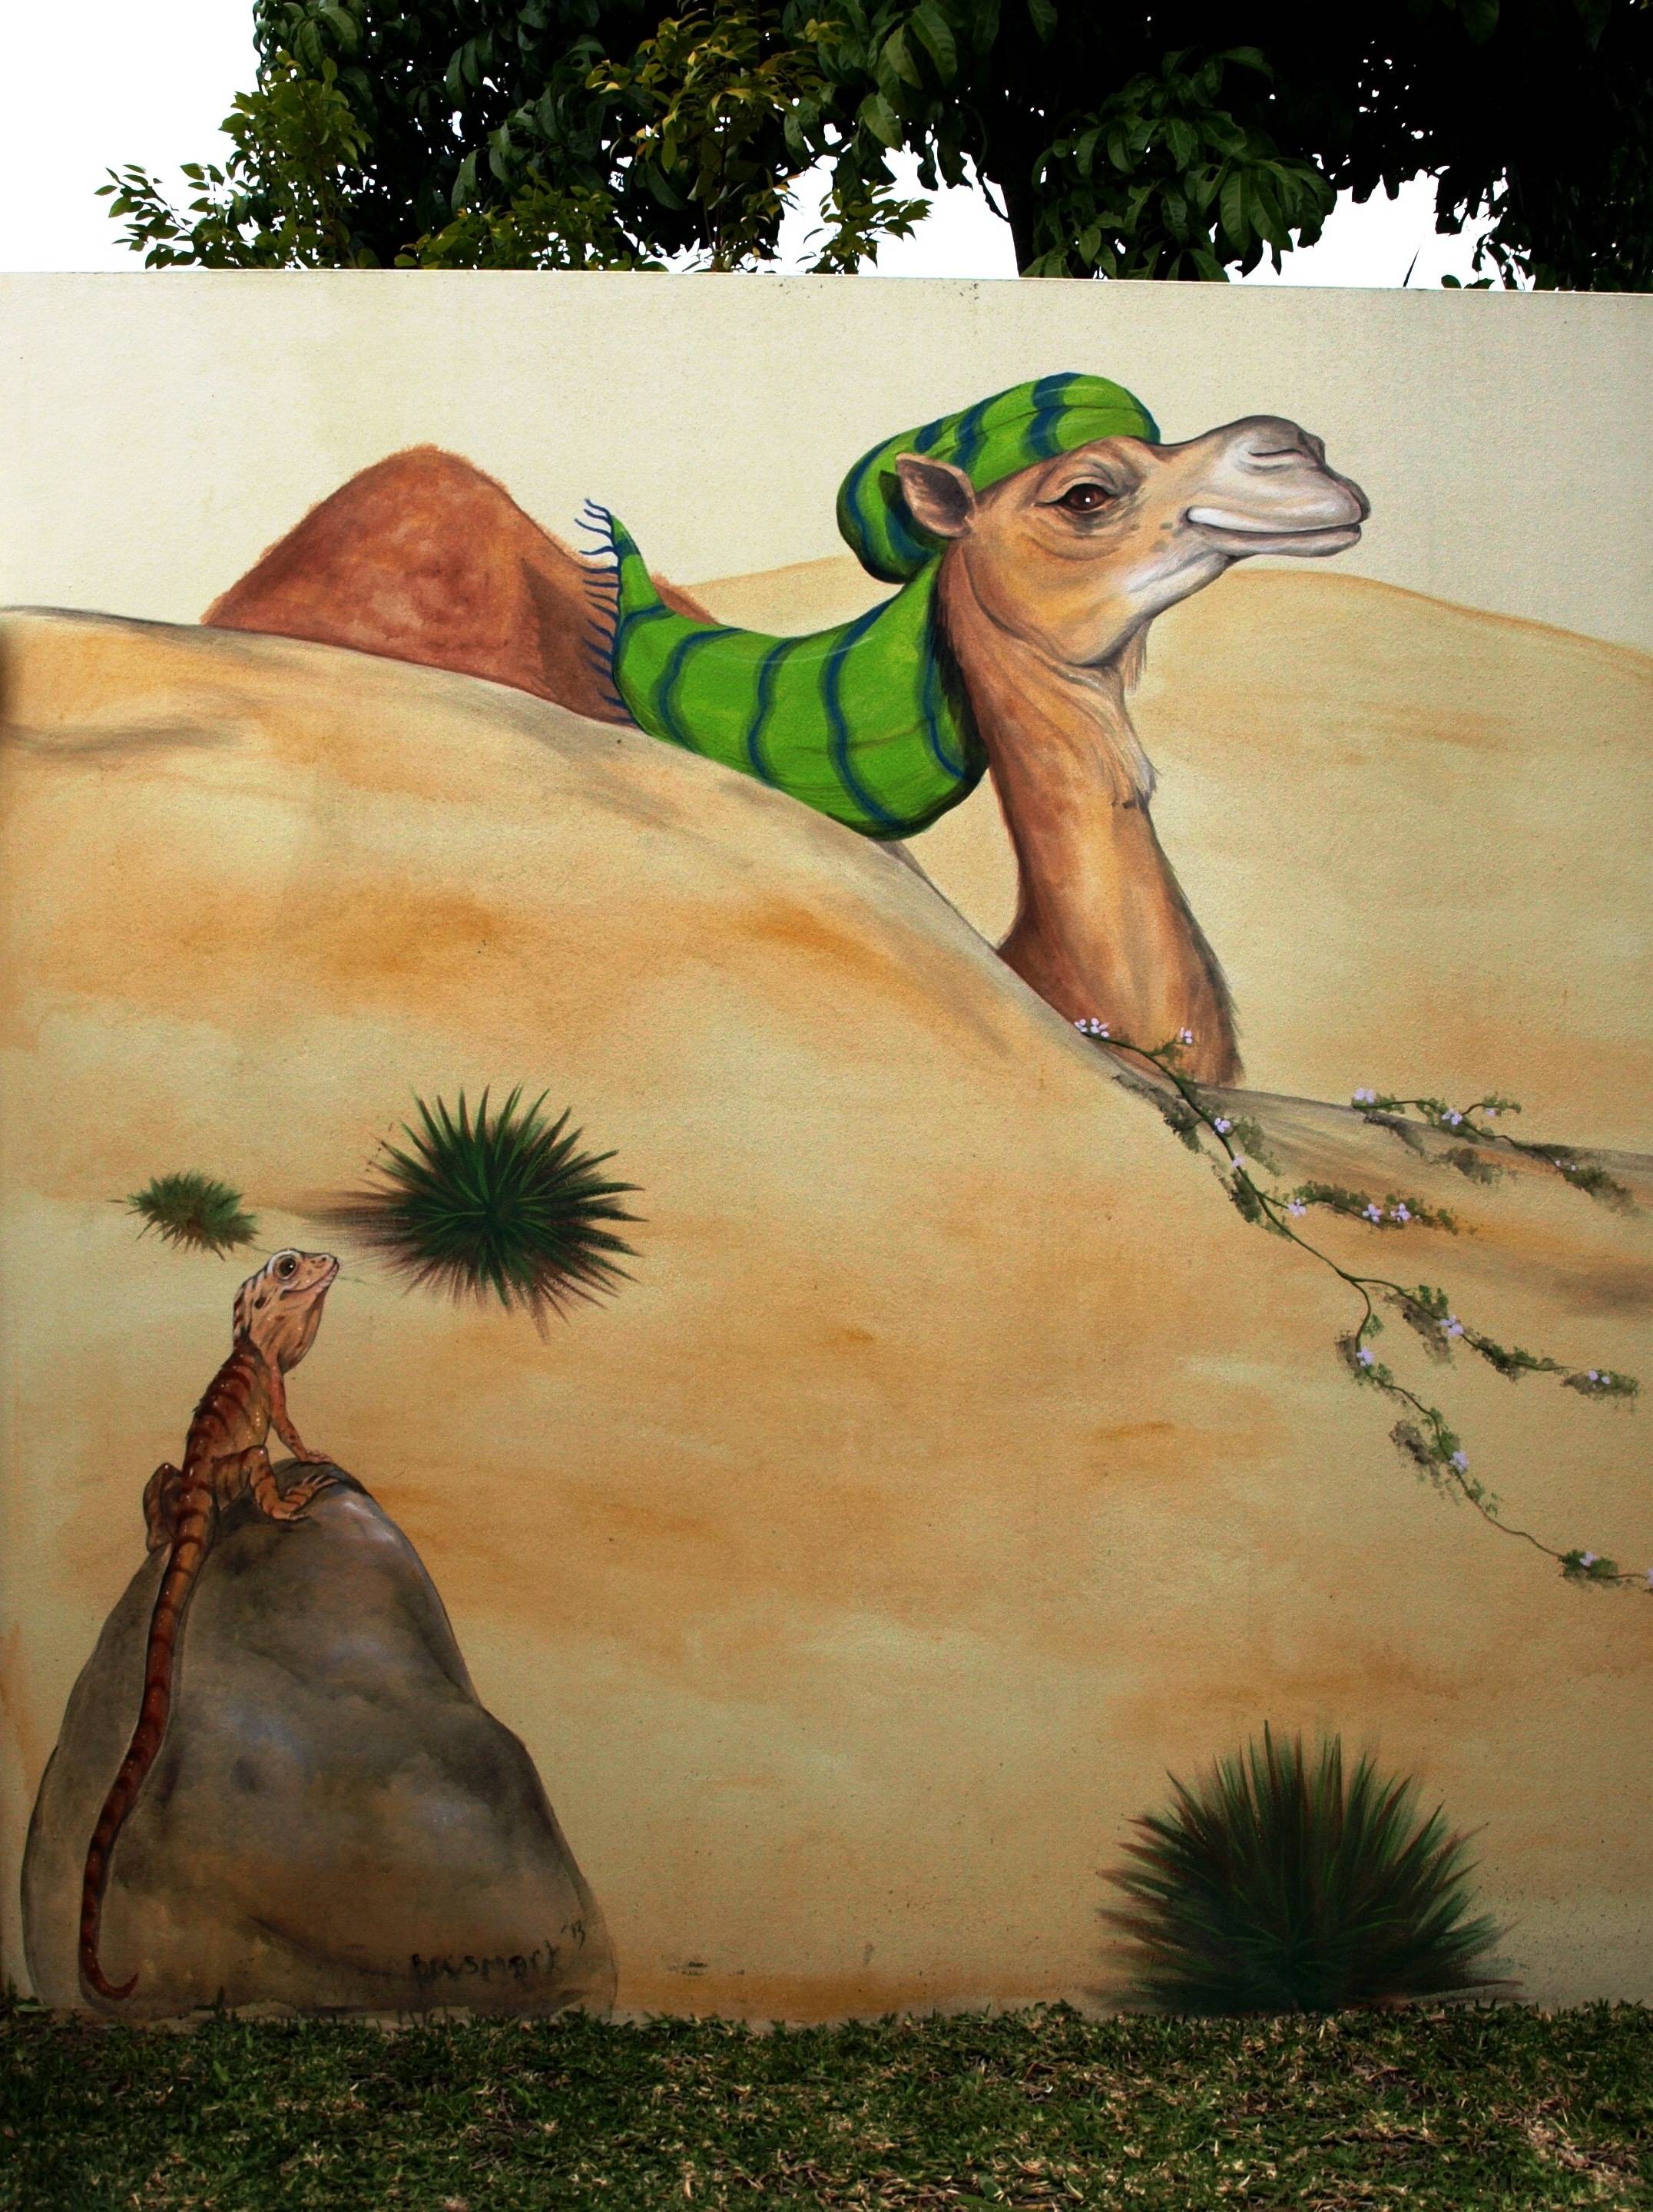 THE DESERT  habib the camel